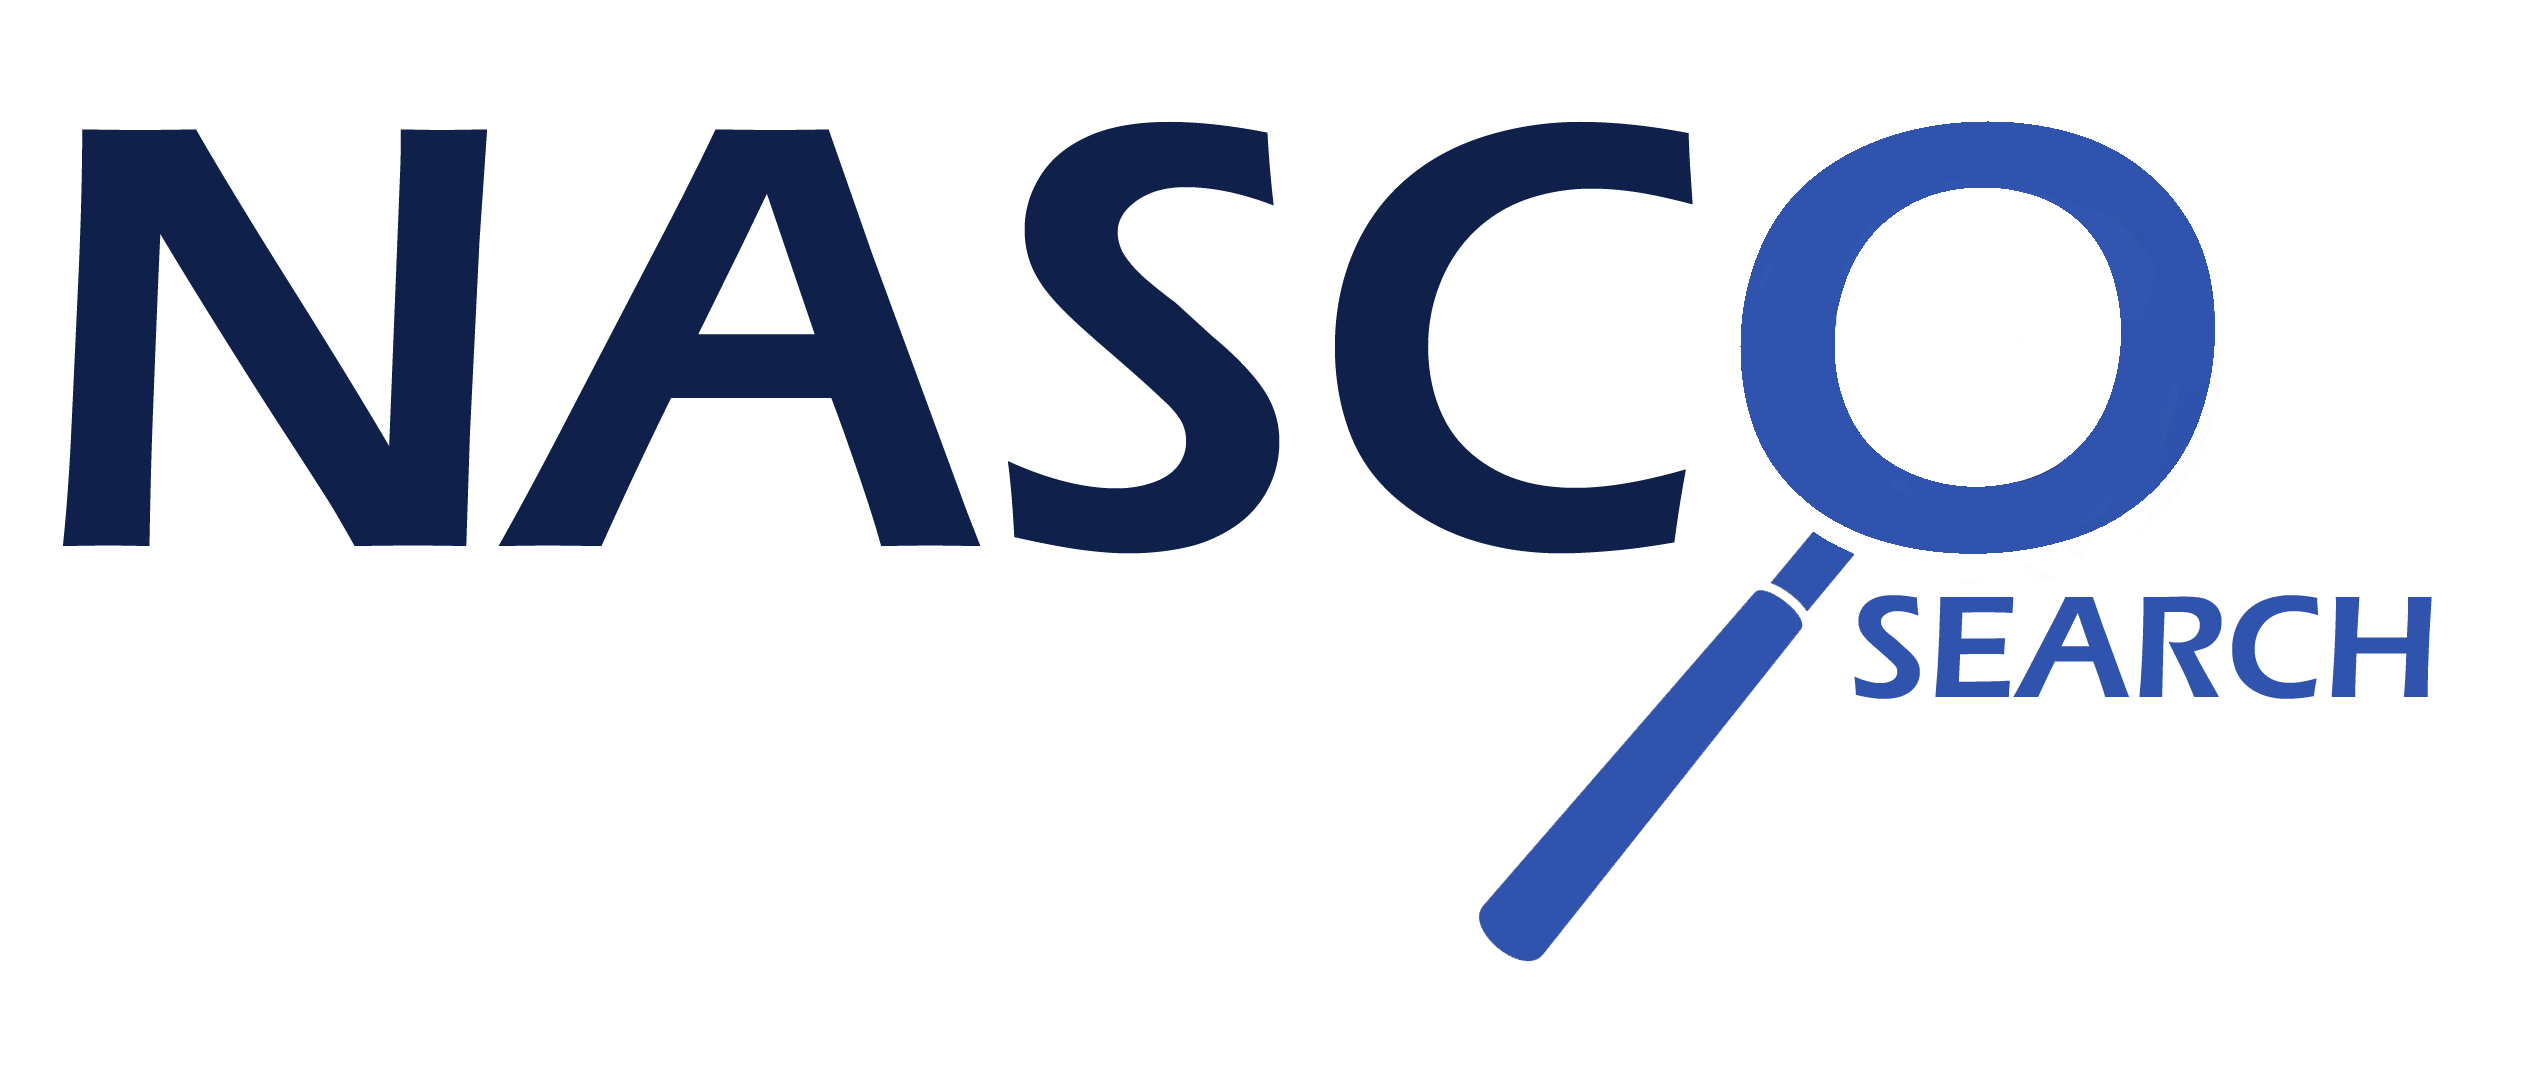 Nasco Logo - Nasco Search Limited